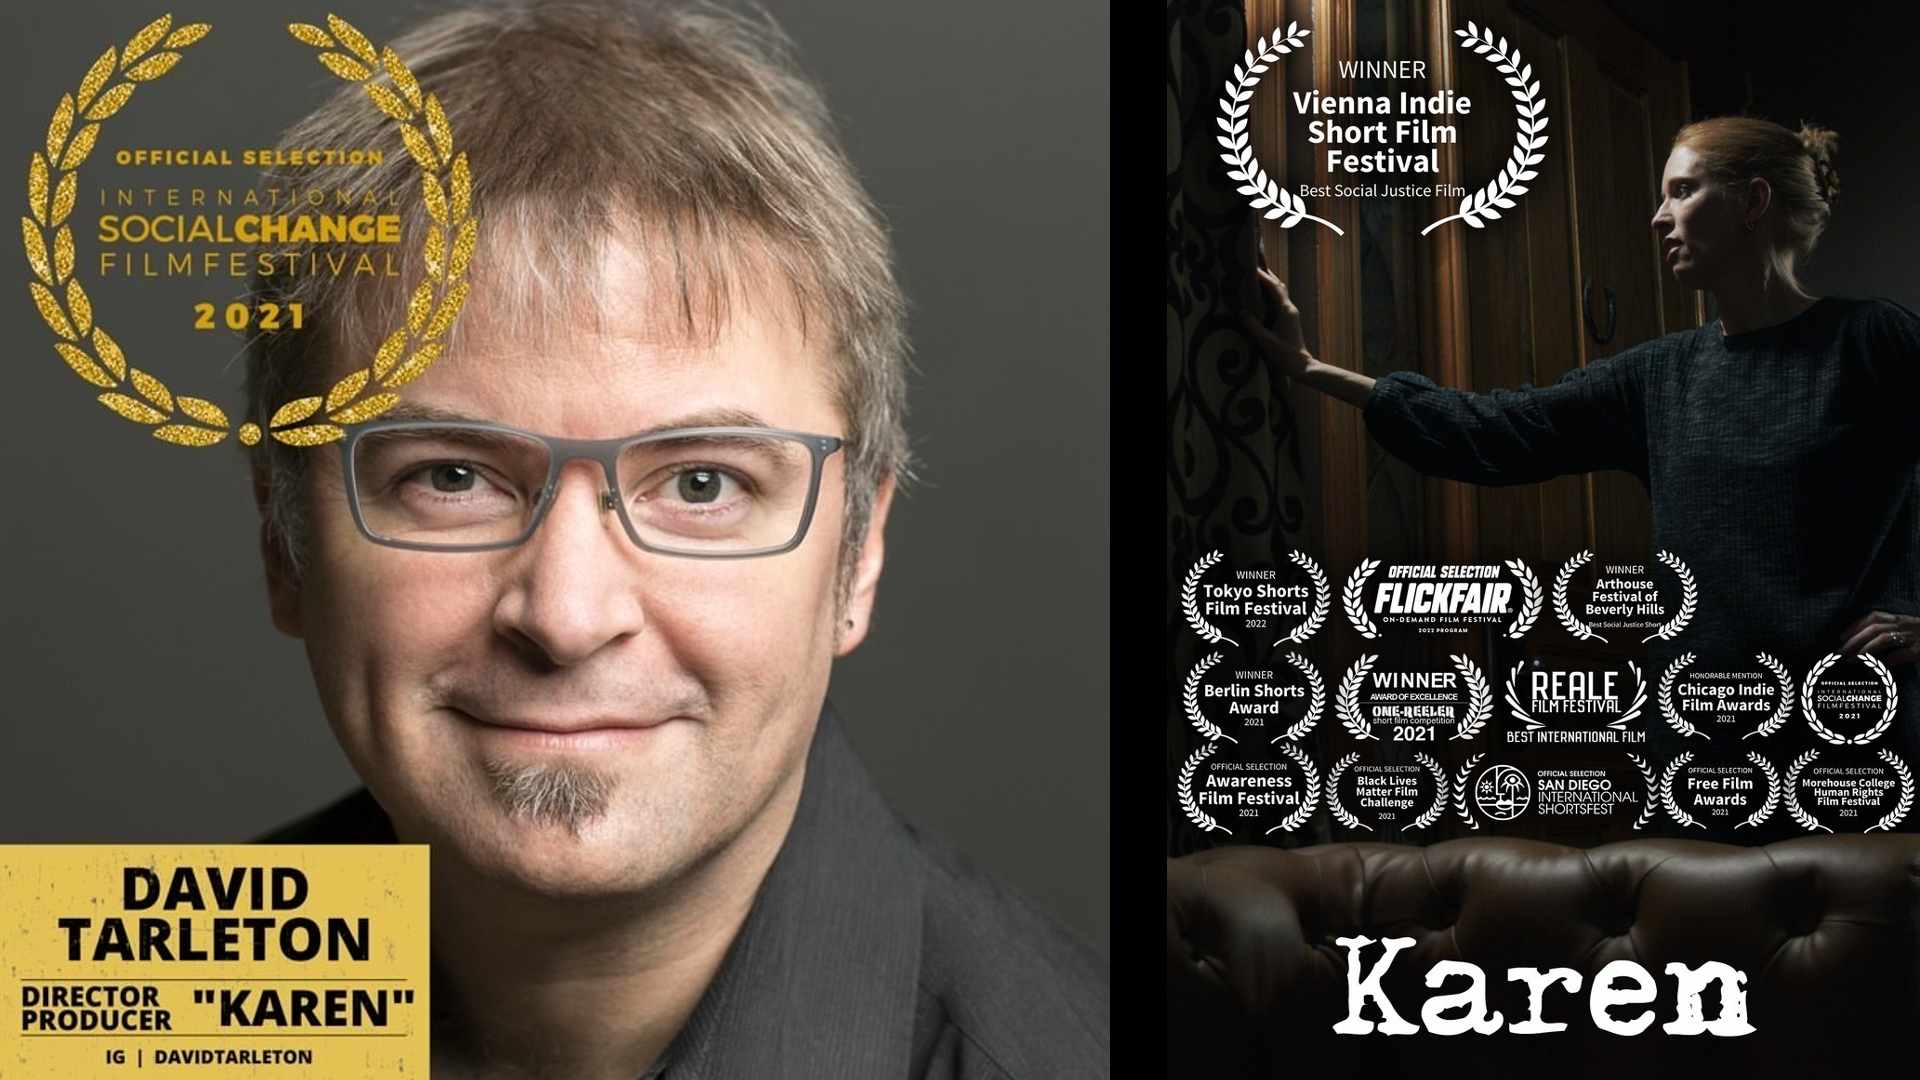 EXCLUSIVE: Award-Winning ‘HUNTER’ DIRECTOR DAVID TARLETON’S LATEST FILM ‘KAREN’ GAINS RECOGNITION